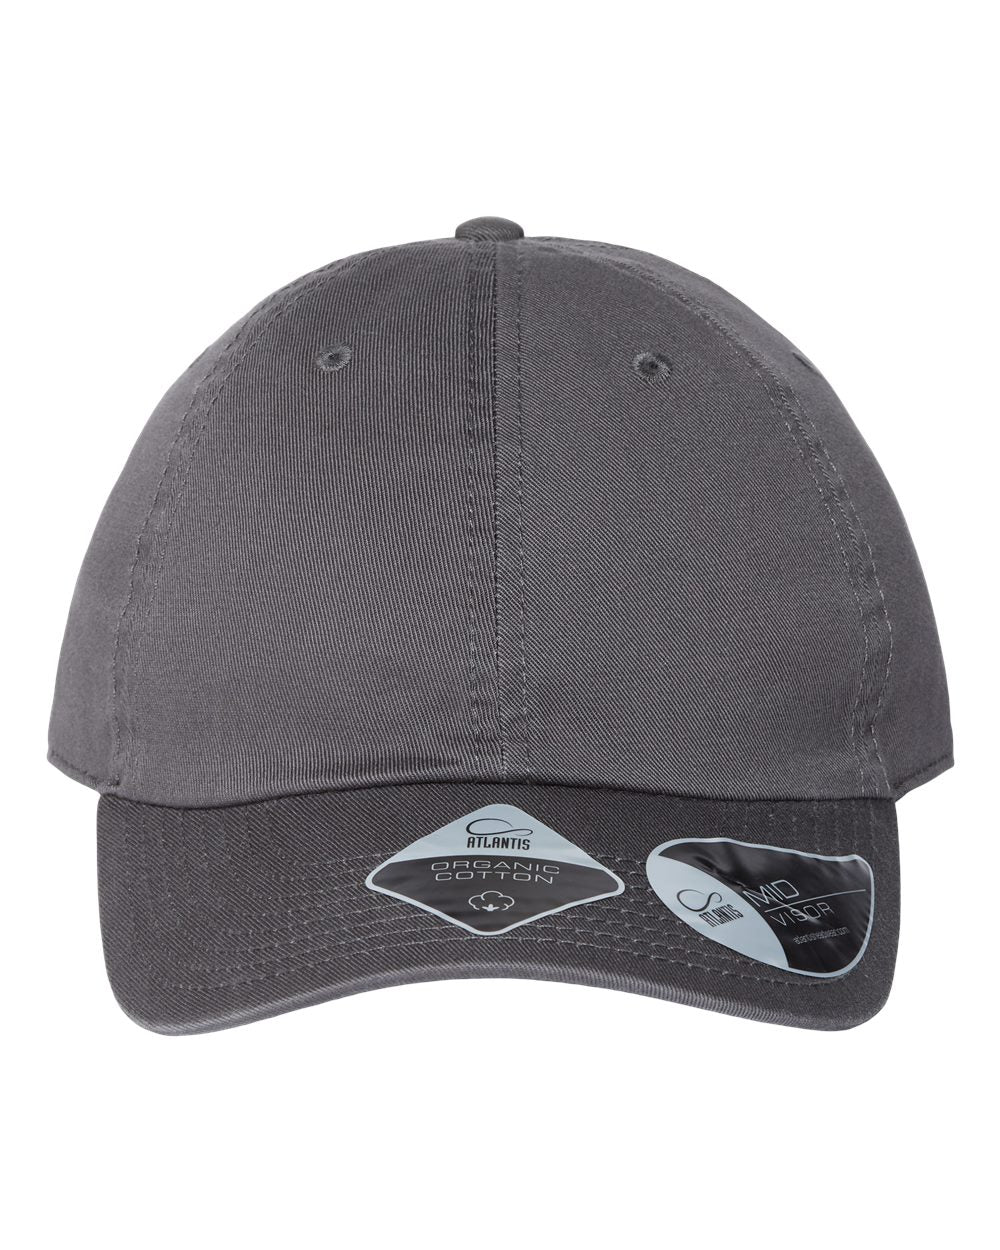 Customizable Atlantis Headwear Organic Cotton Fraser Hat in gray